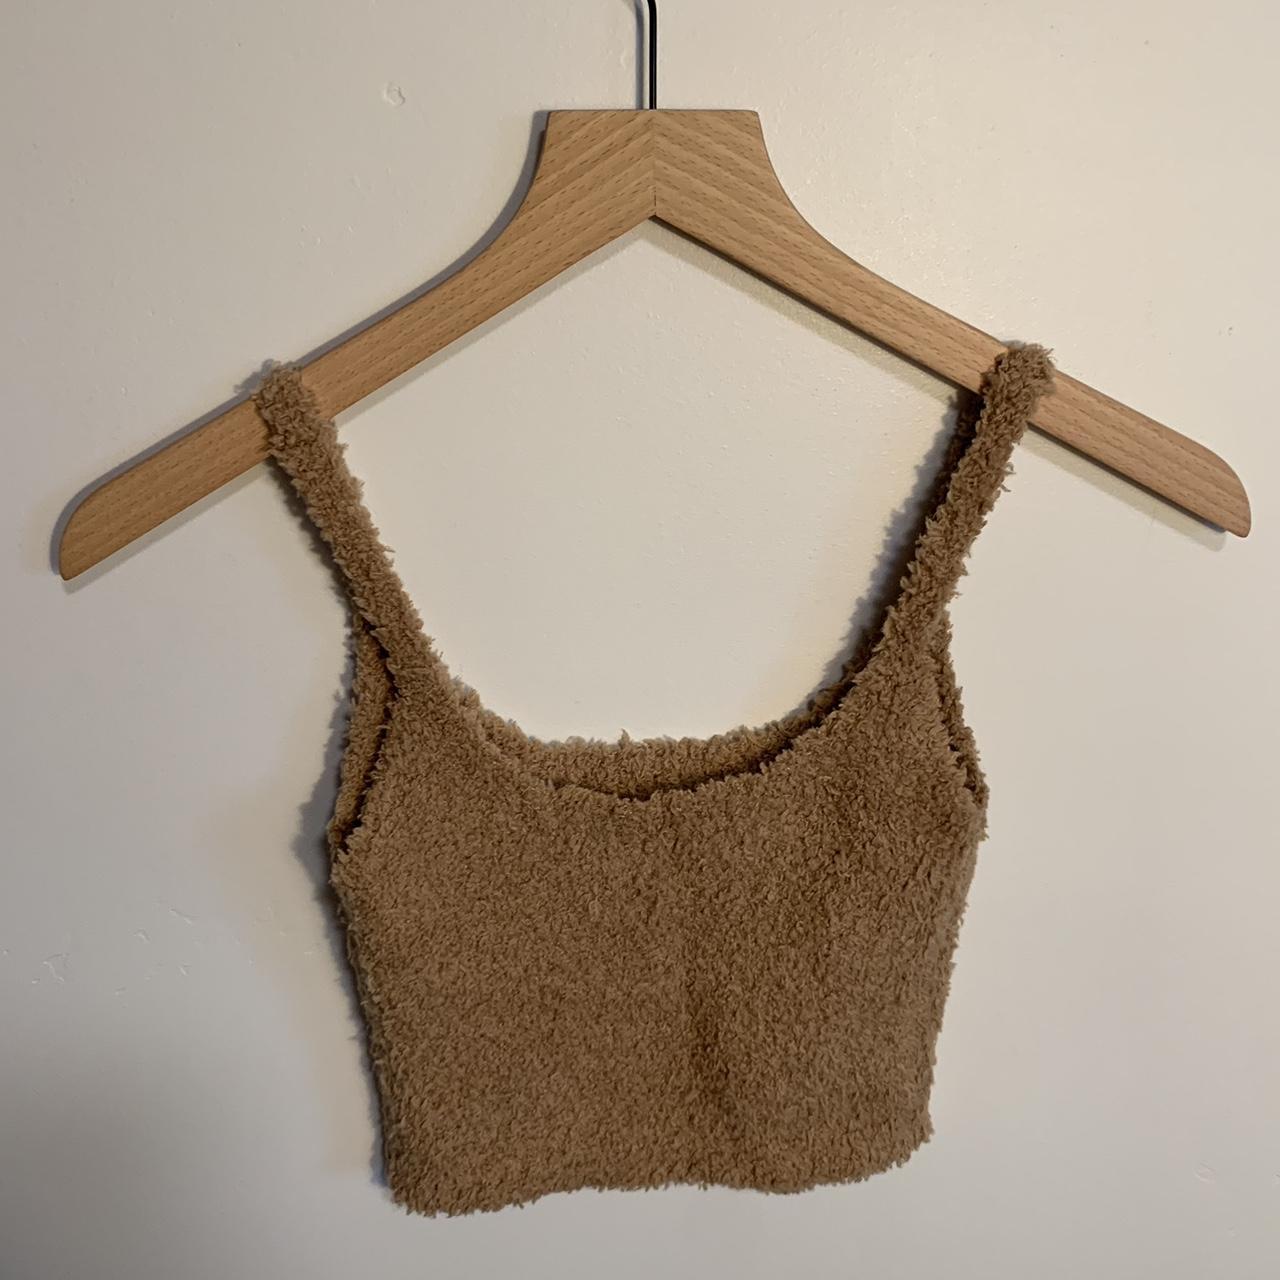 skims cozy knit teddy tank top/cami tan/brown - Depop